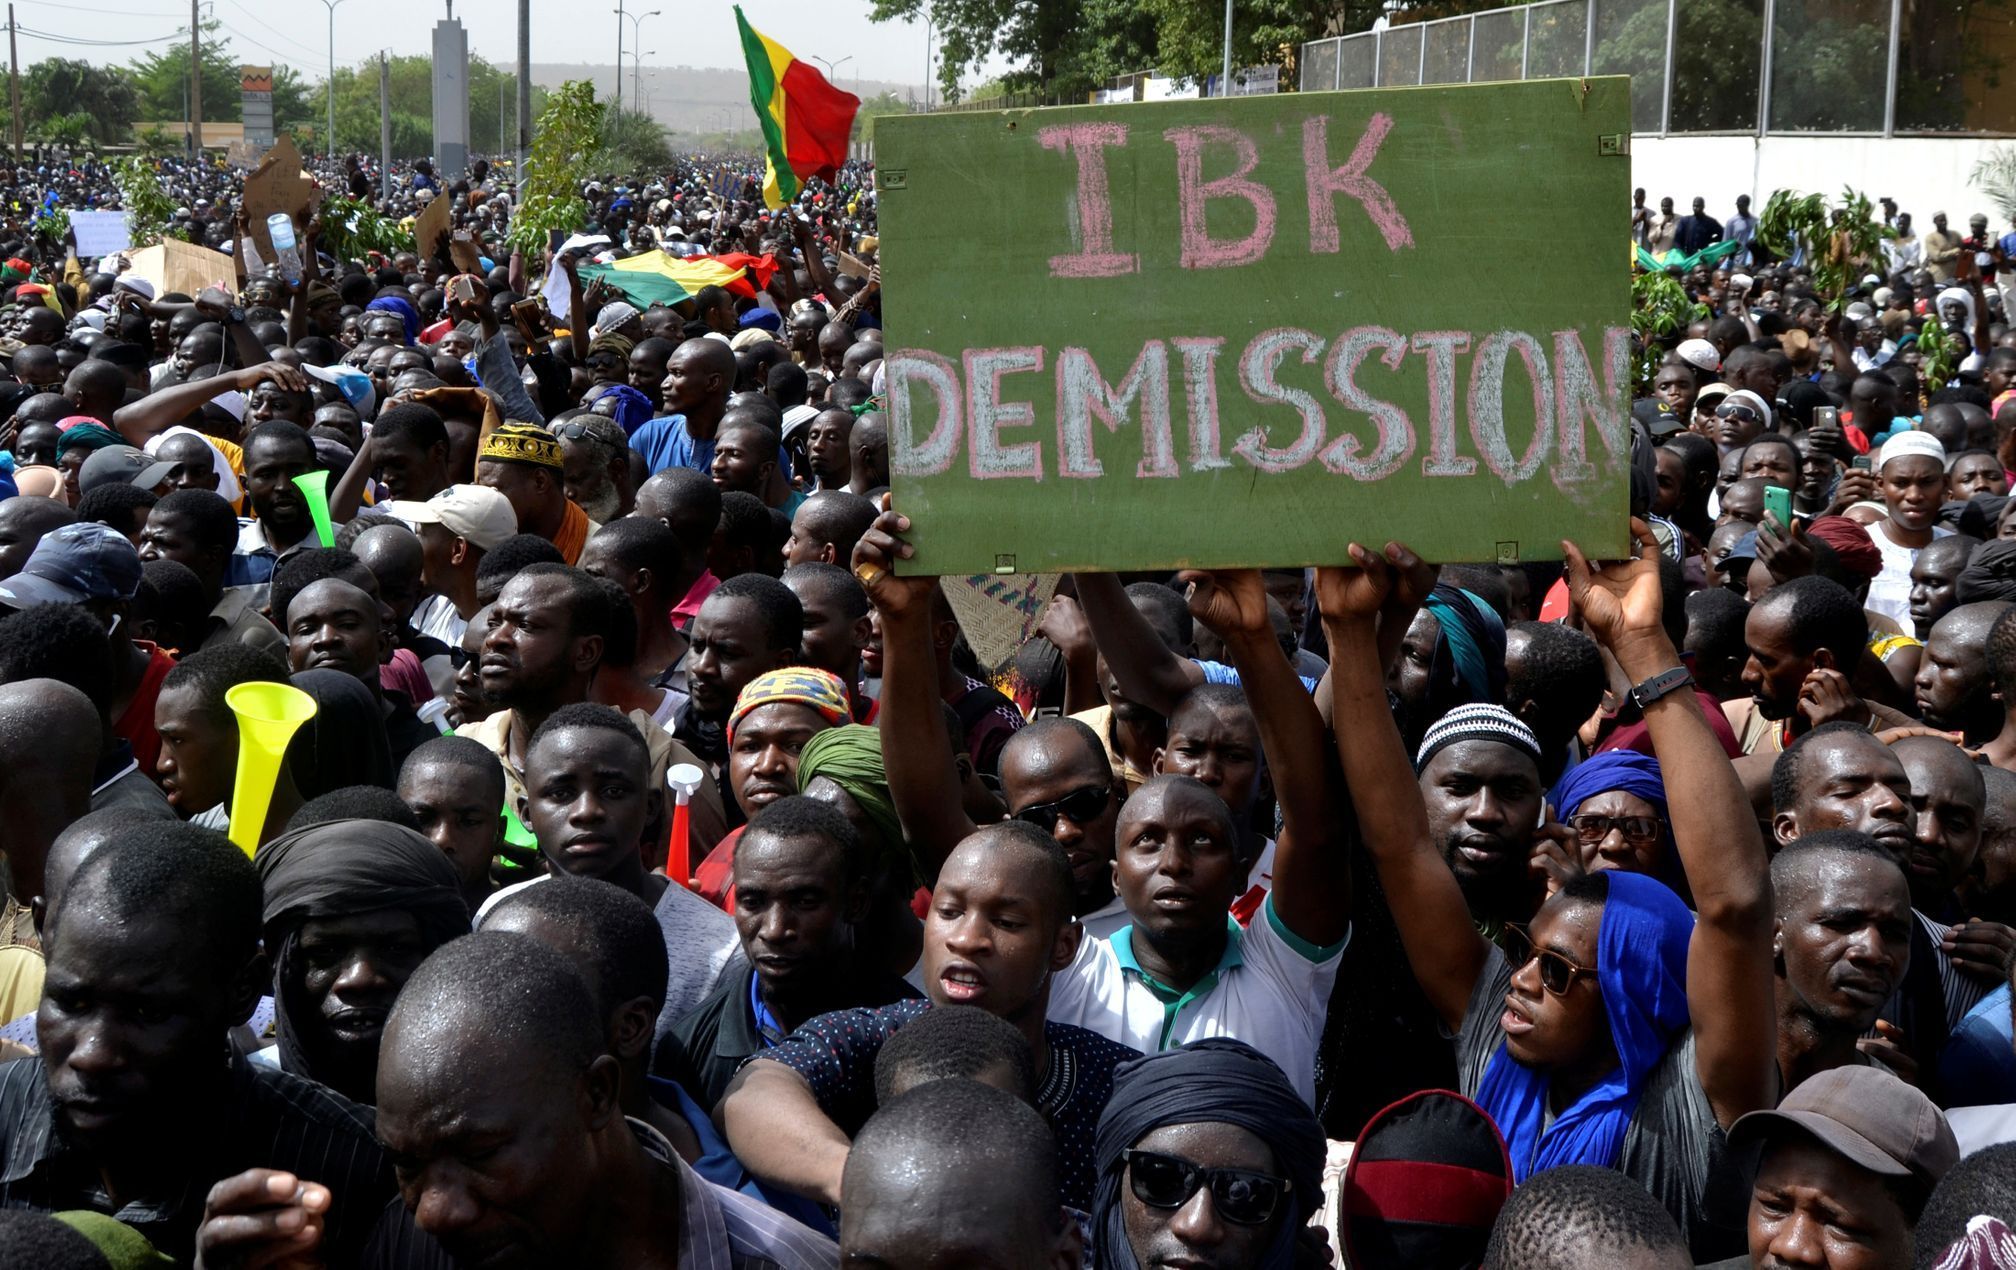 Protesty v Mali